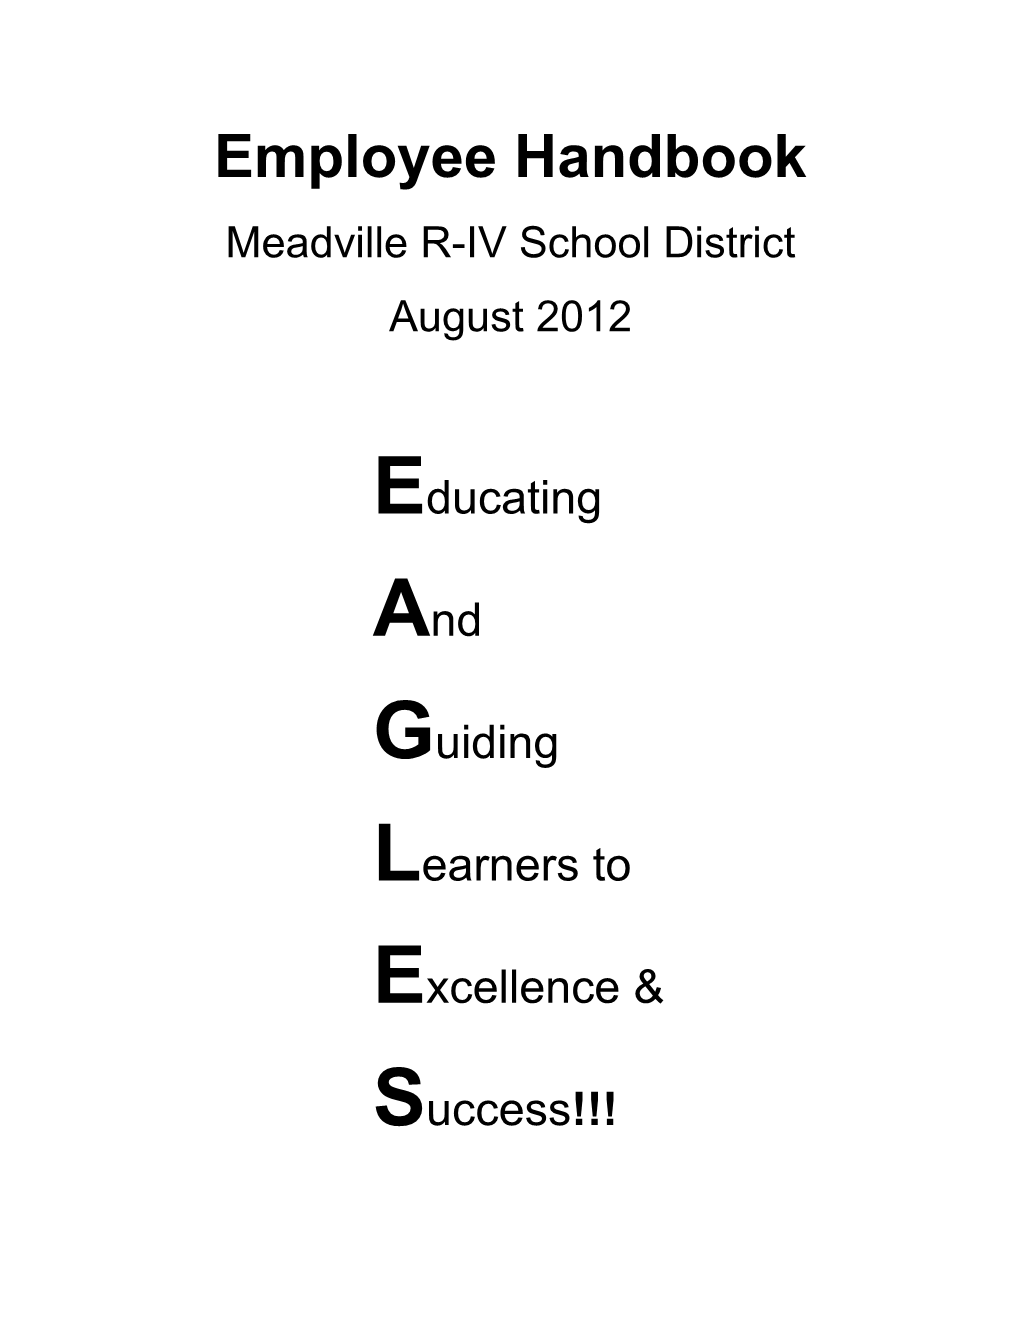 Employee Handbook s2